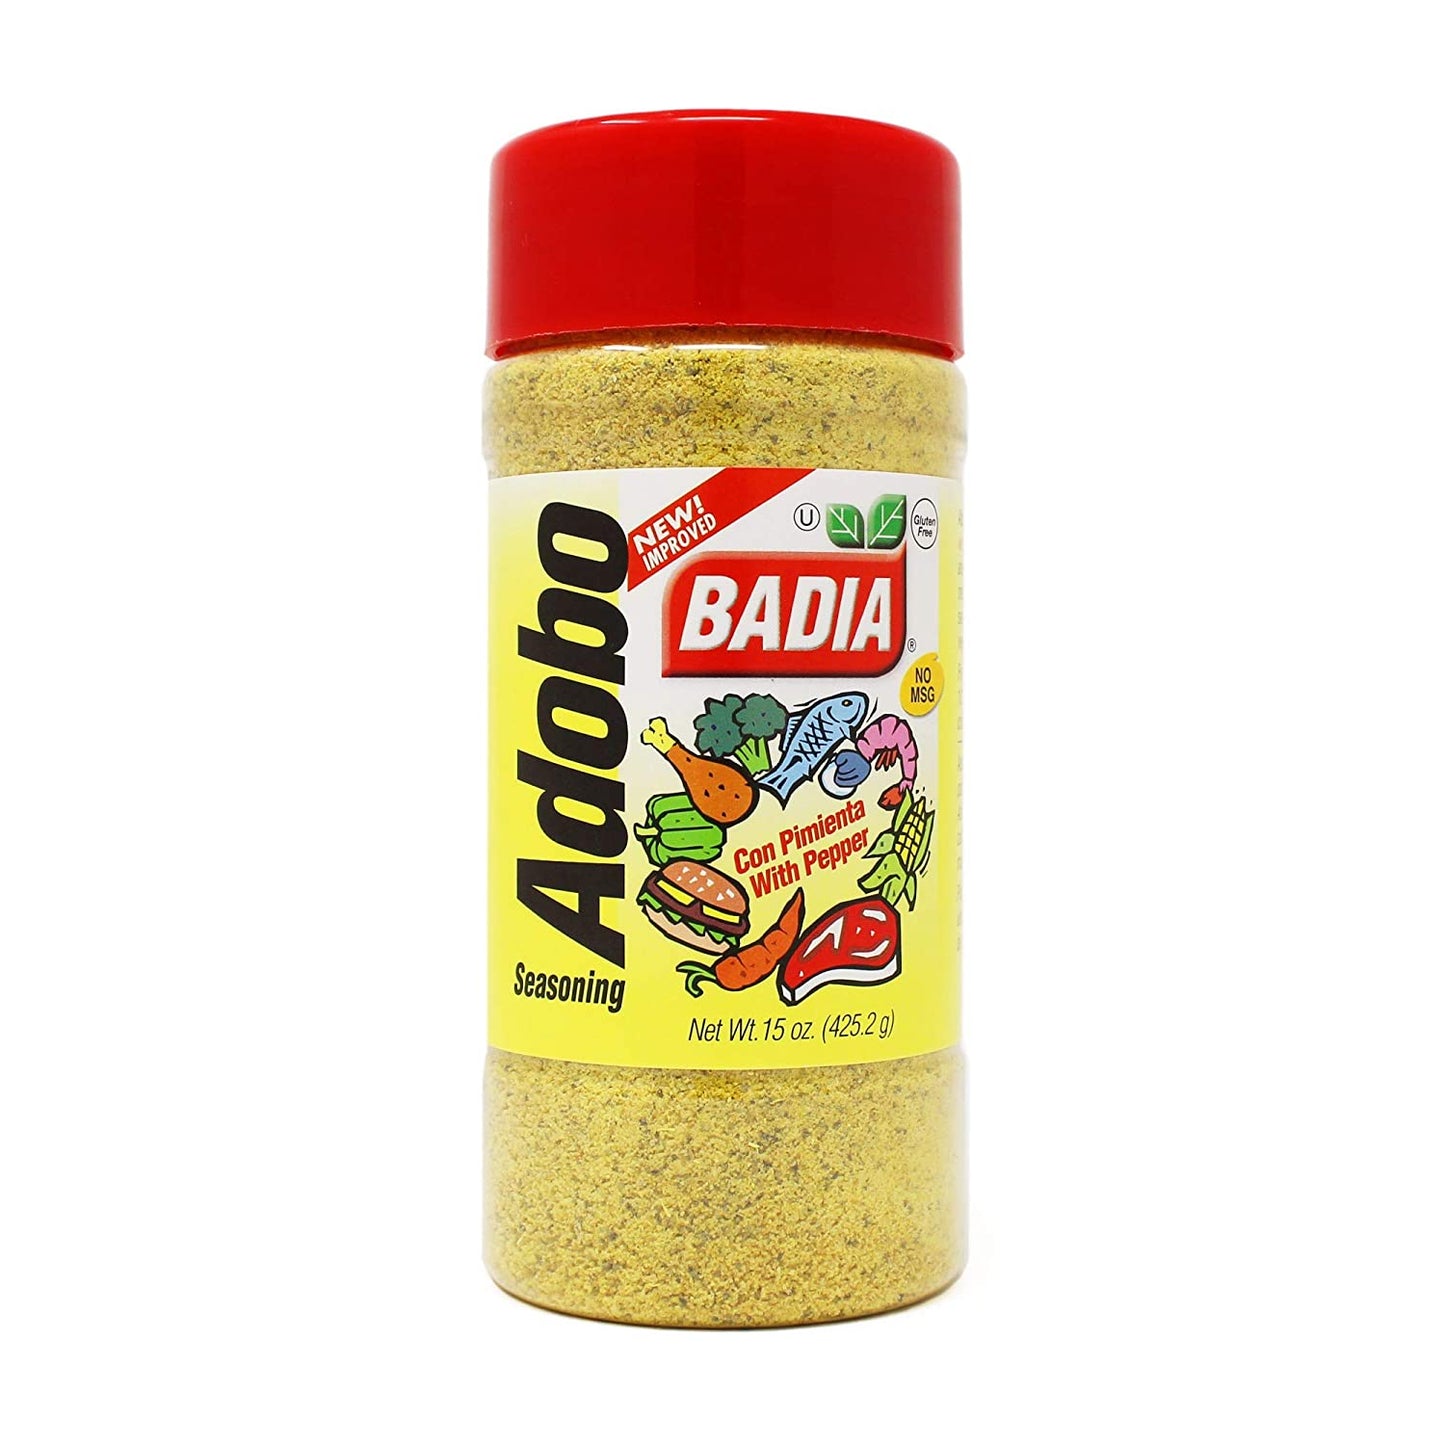 Adobo Badia Seasoning with Pepper 425g